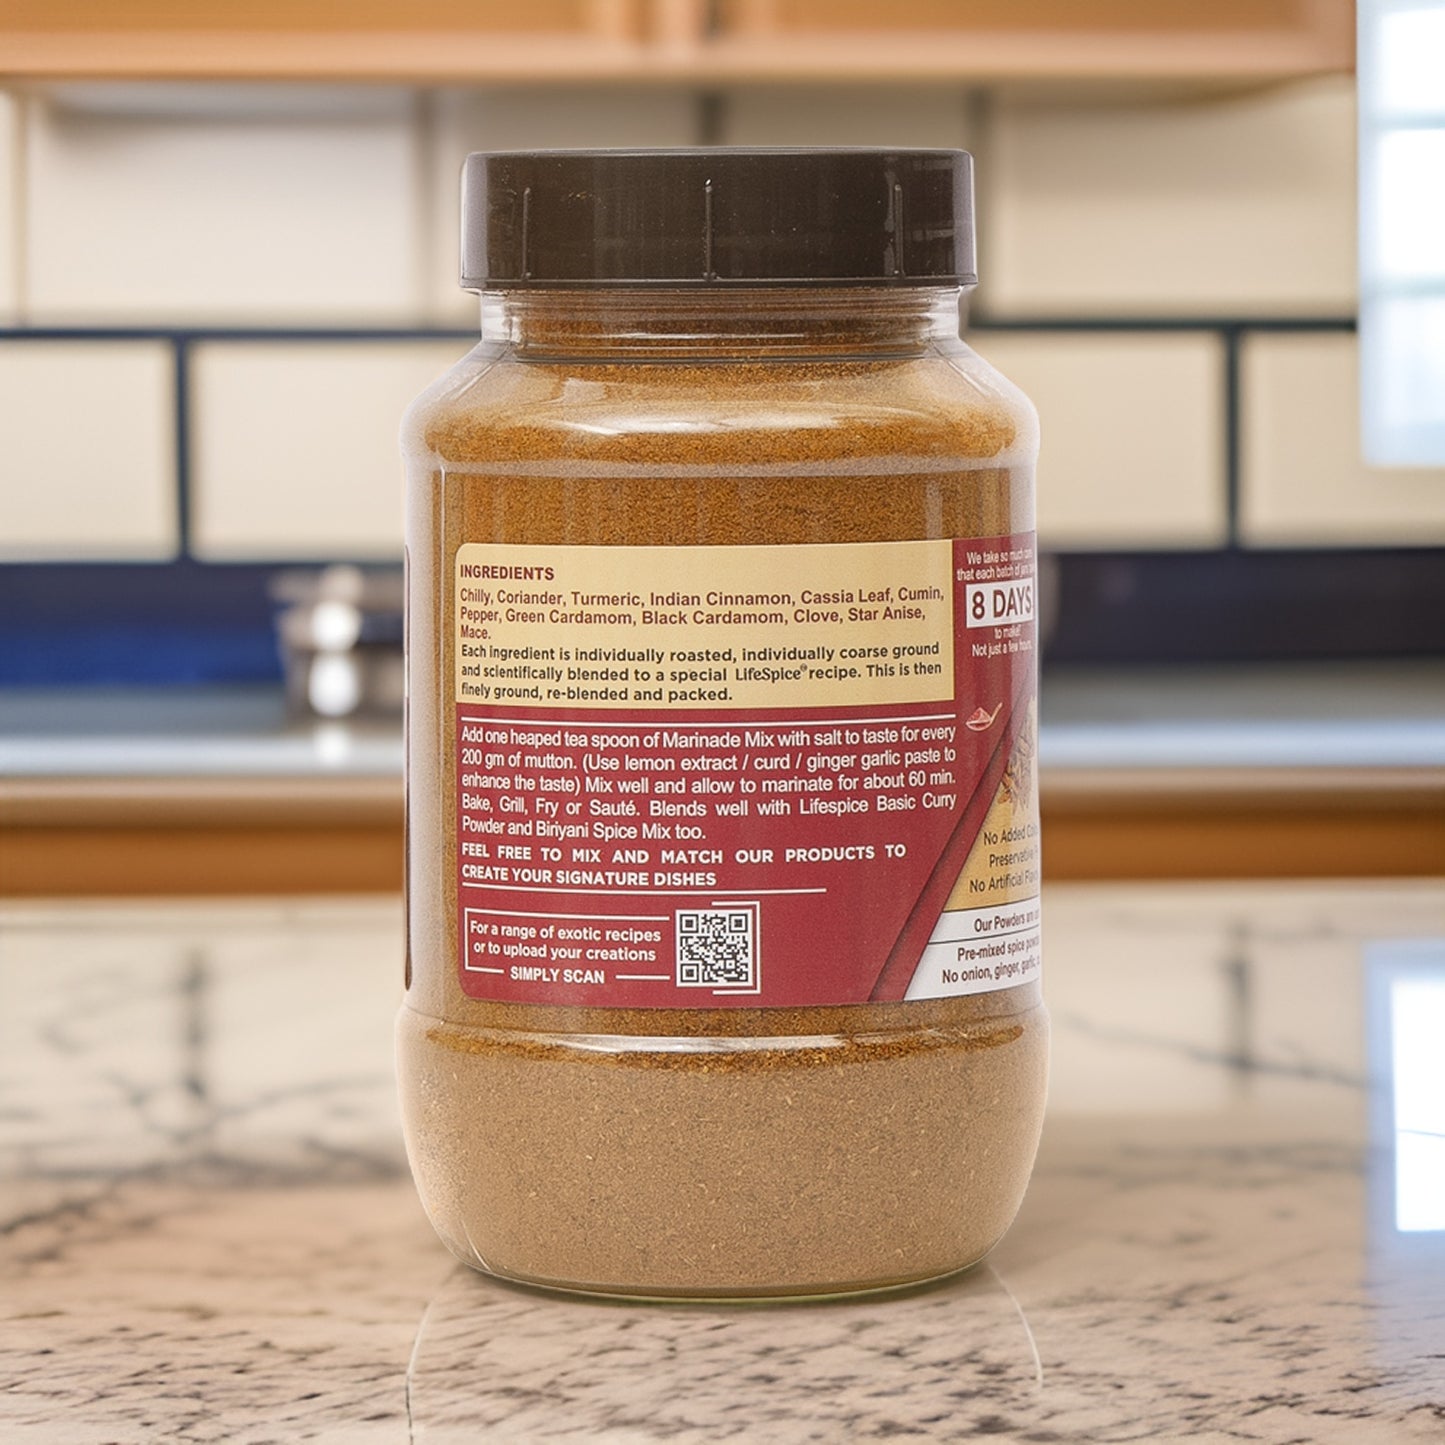 Lifespice - Mutton Marinade Mix 150g PET Jar